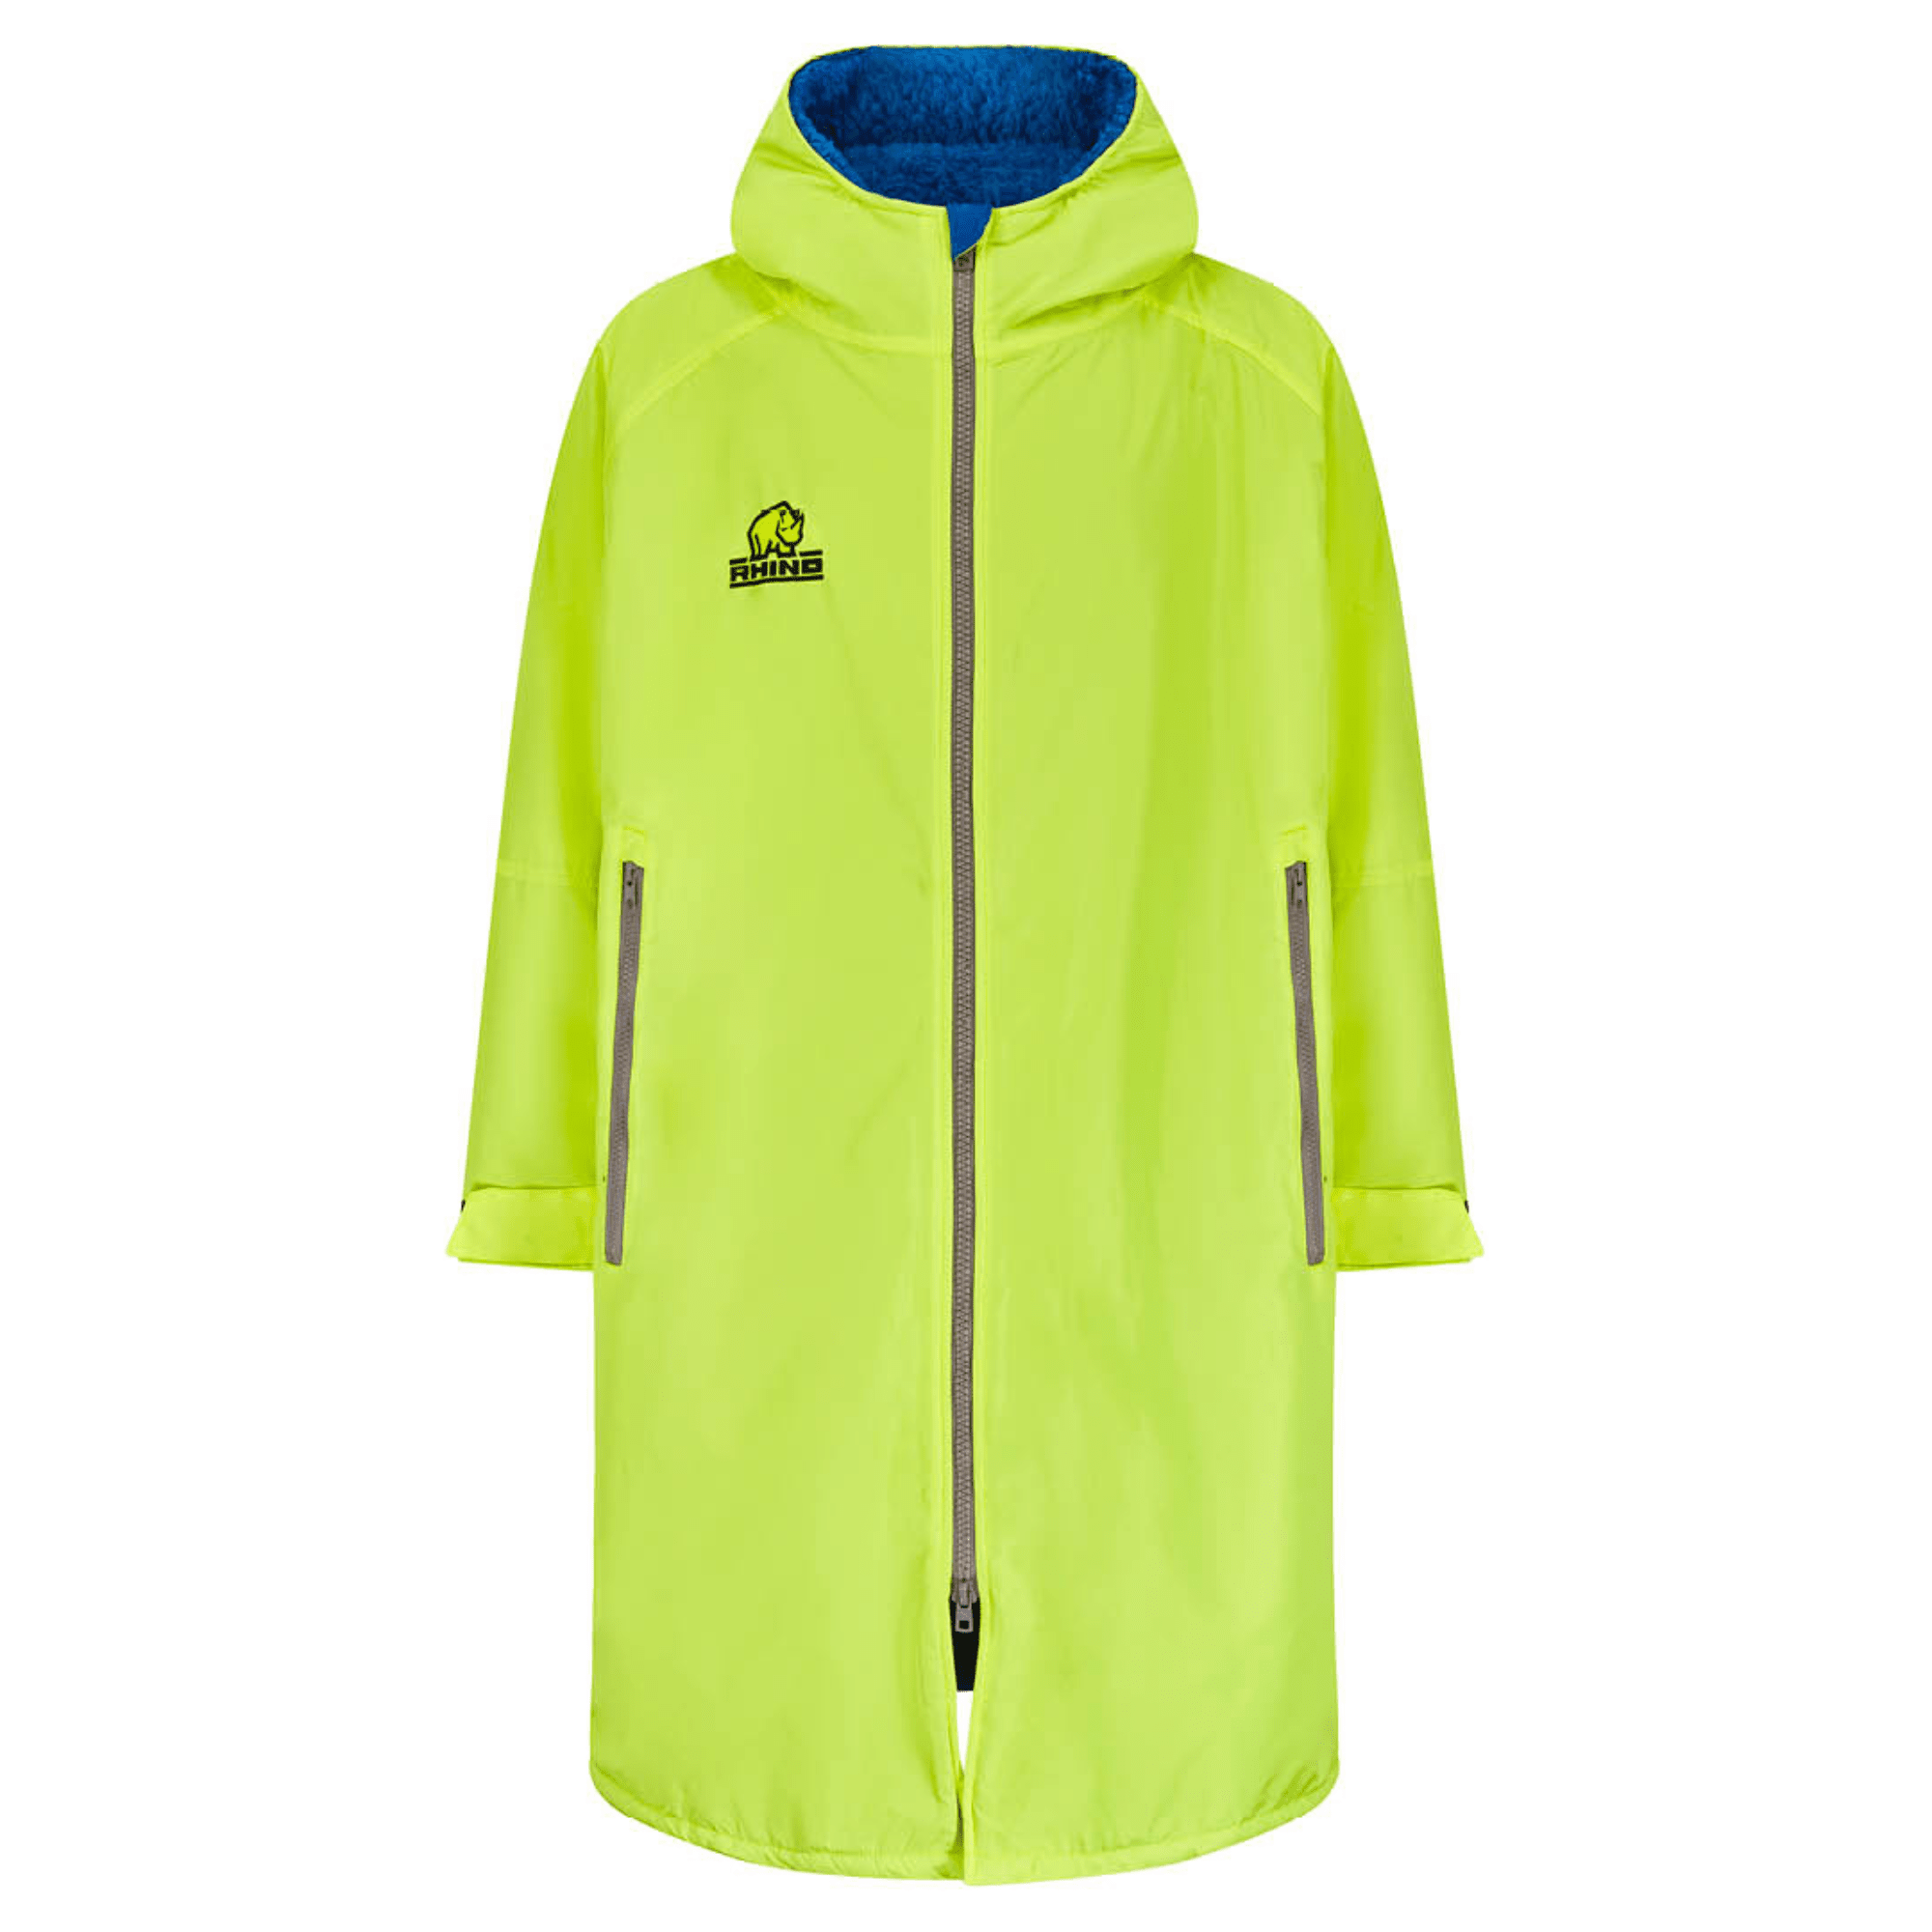 Sherpa Robe Yellow Fleece Inner Lining Waterproof Jacket Keep Dry